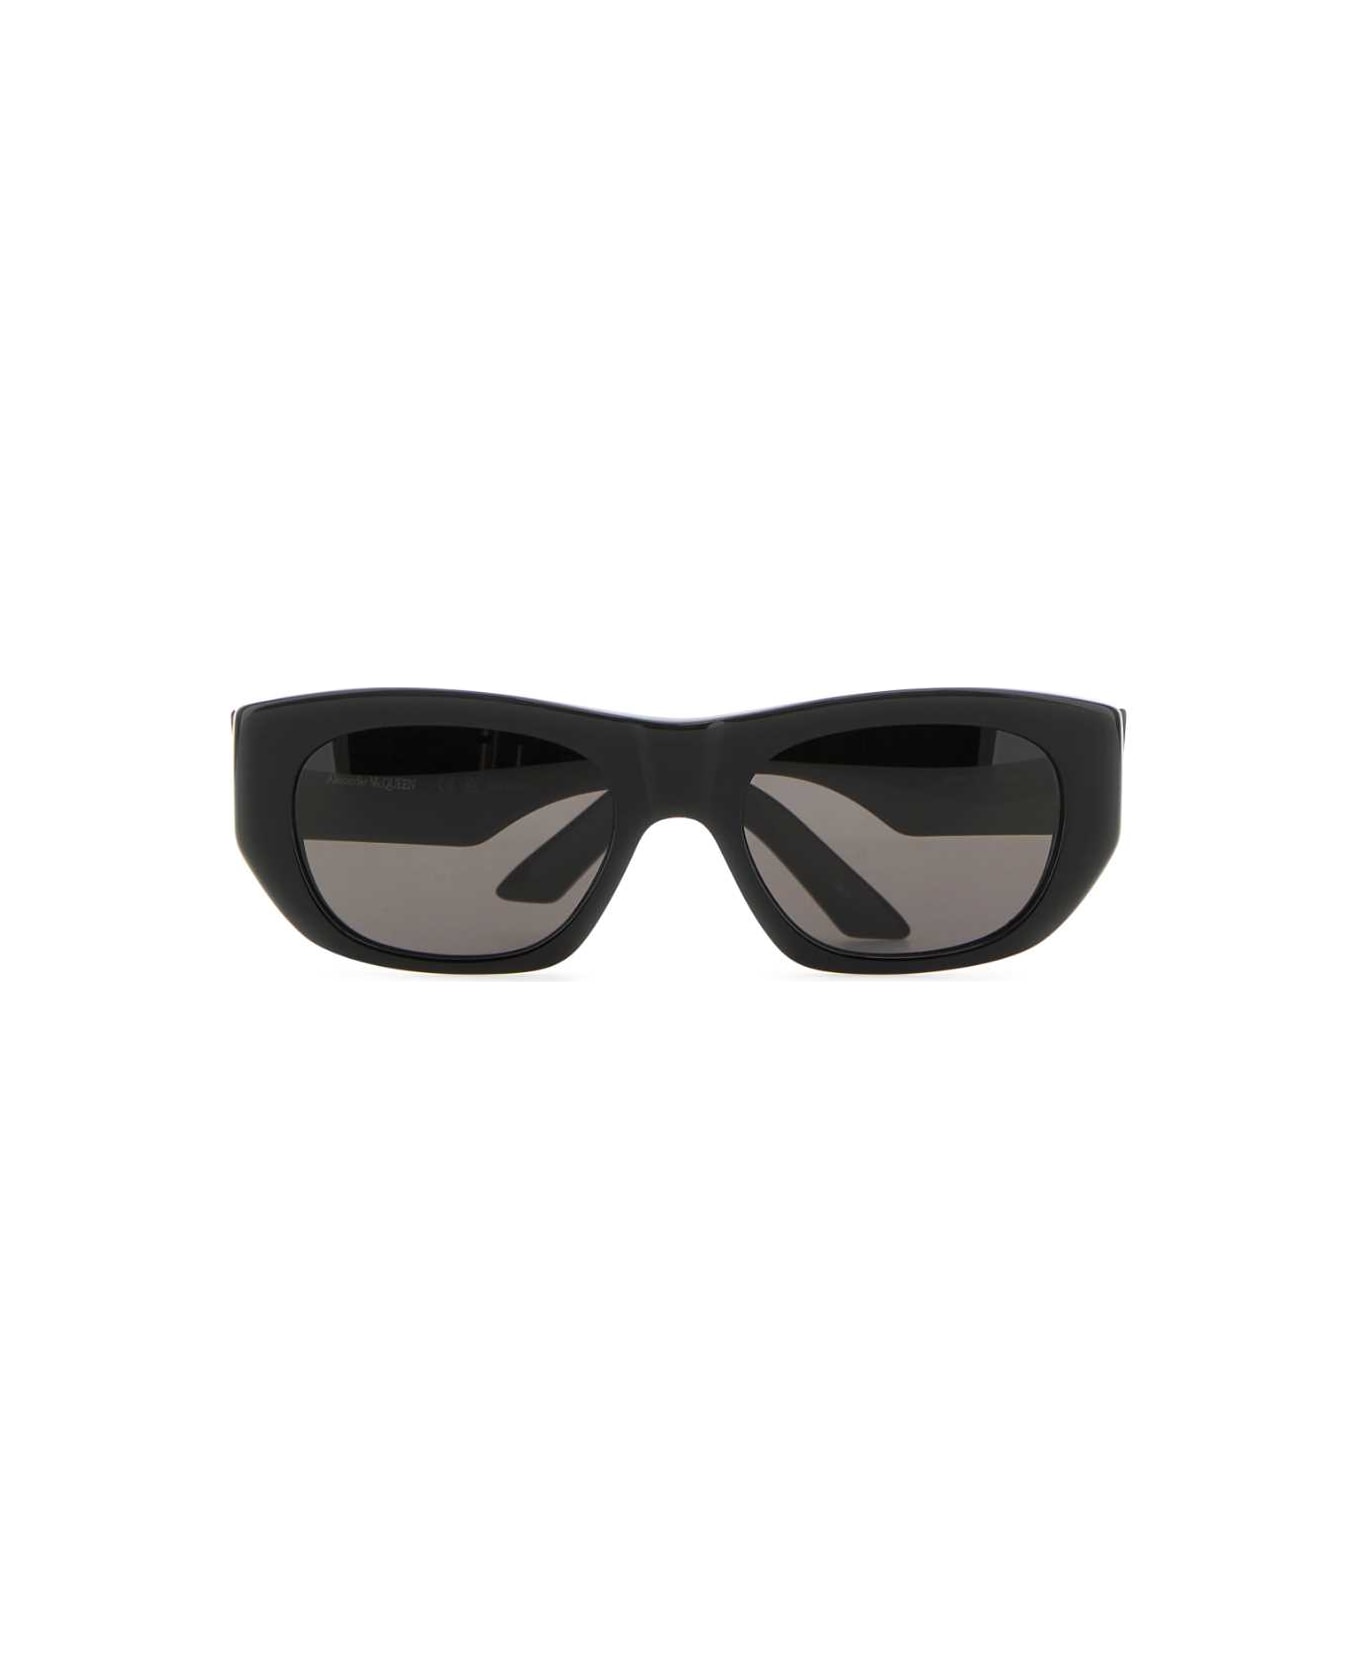 Alexander McQueen Black Acetate Punk Rivet Sunglasses - SOLIDGREY サングラス